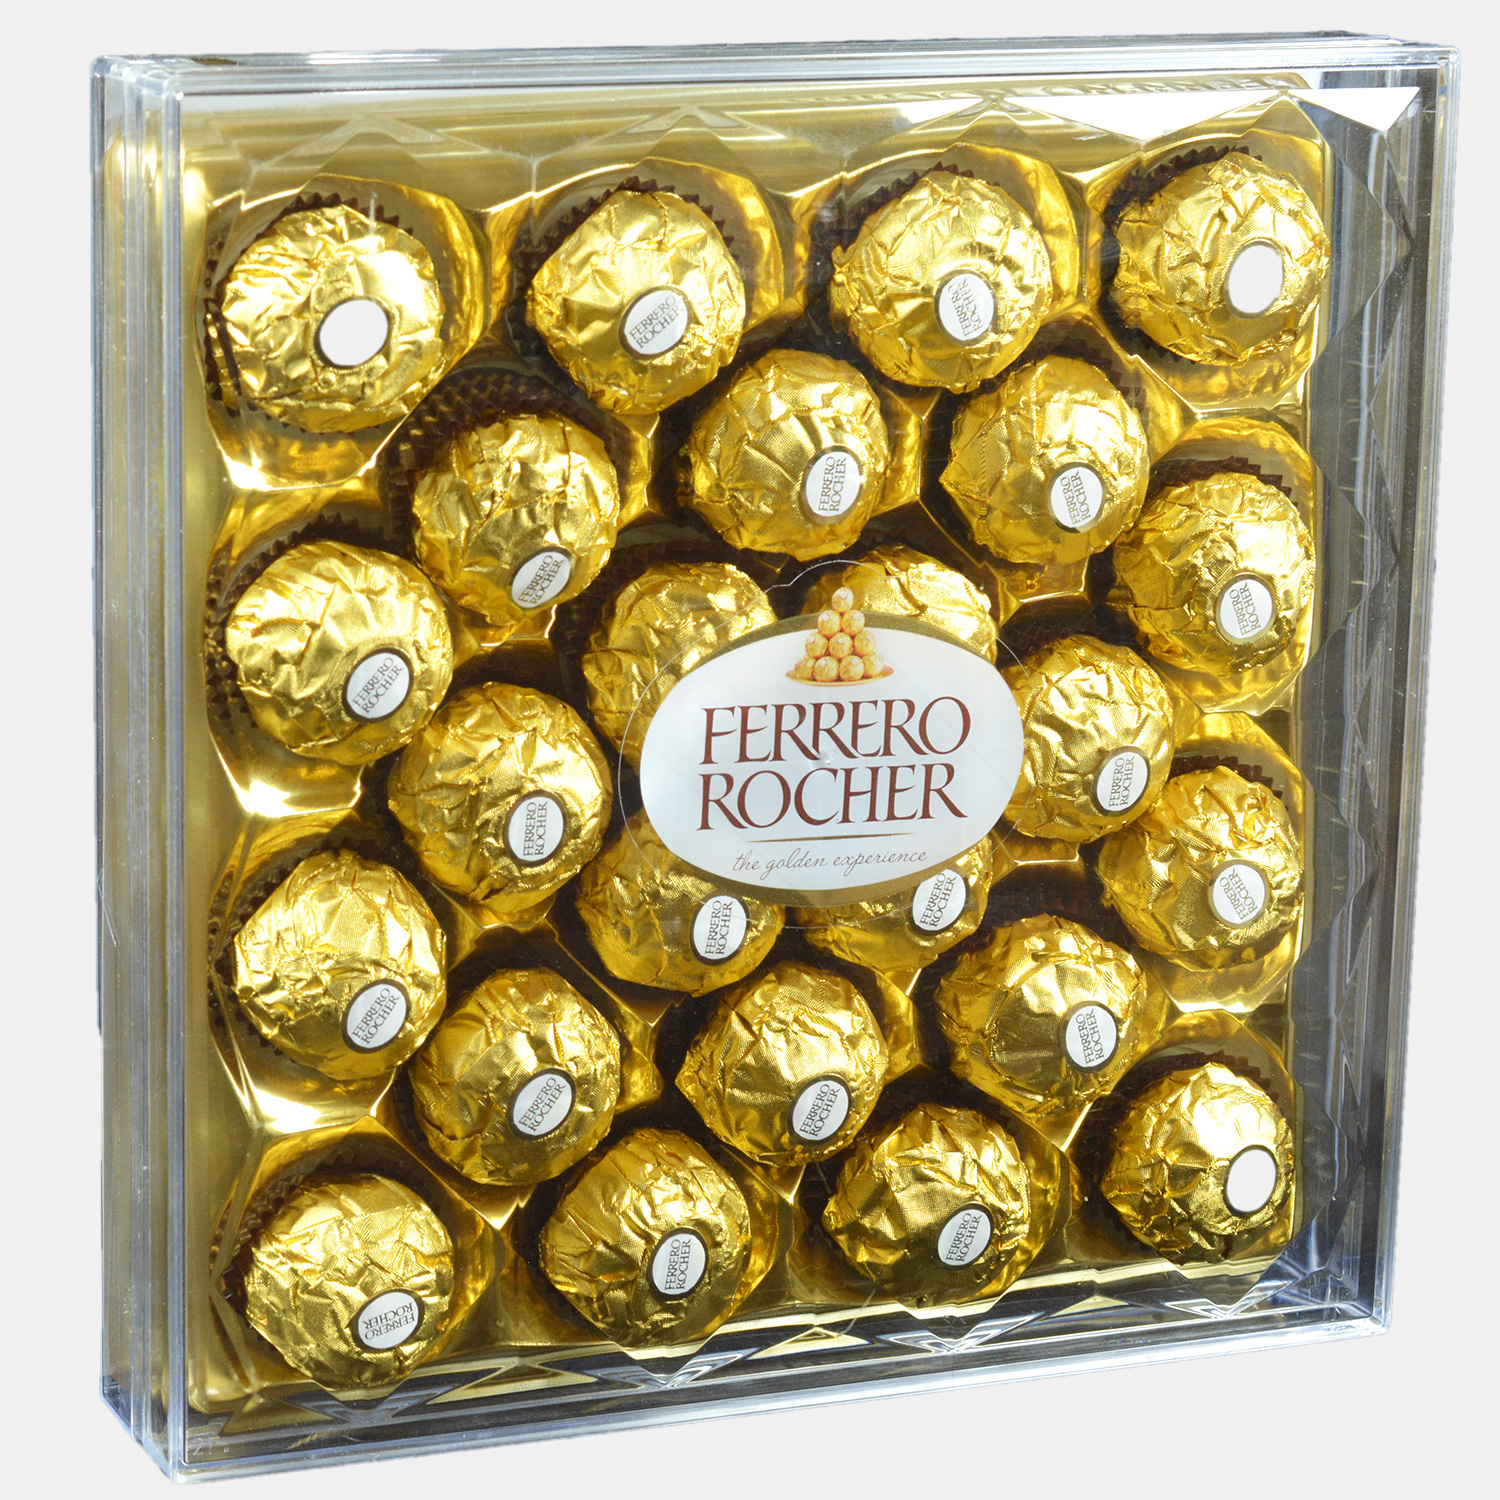 24 pcs Golden Experience Premium Ferrero Rocher Chocolate